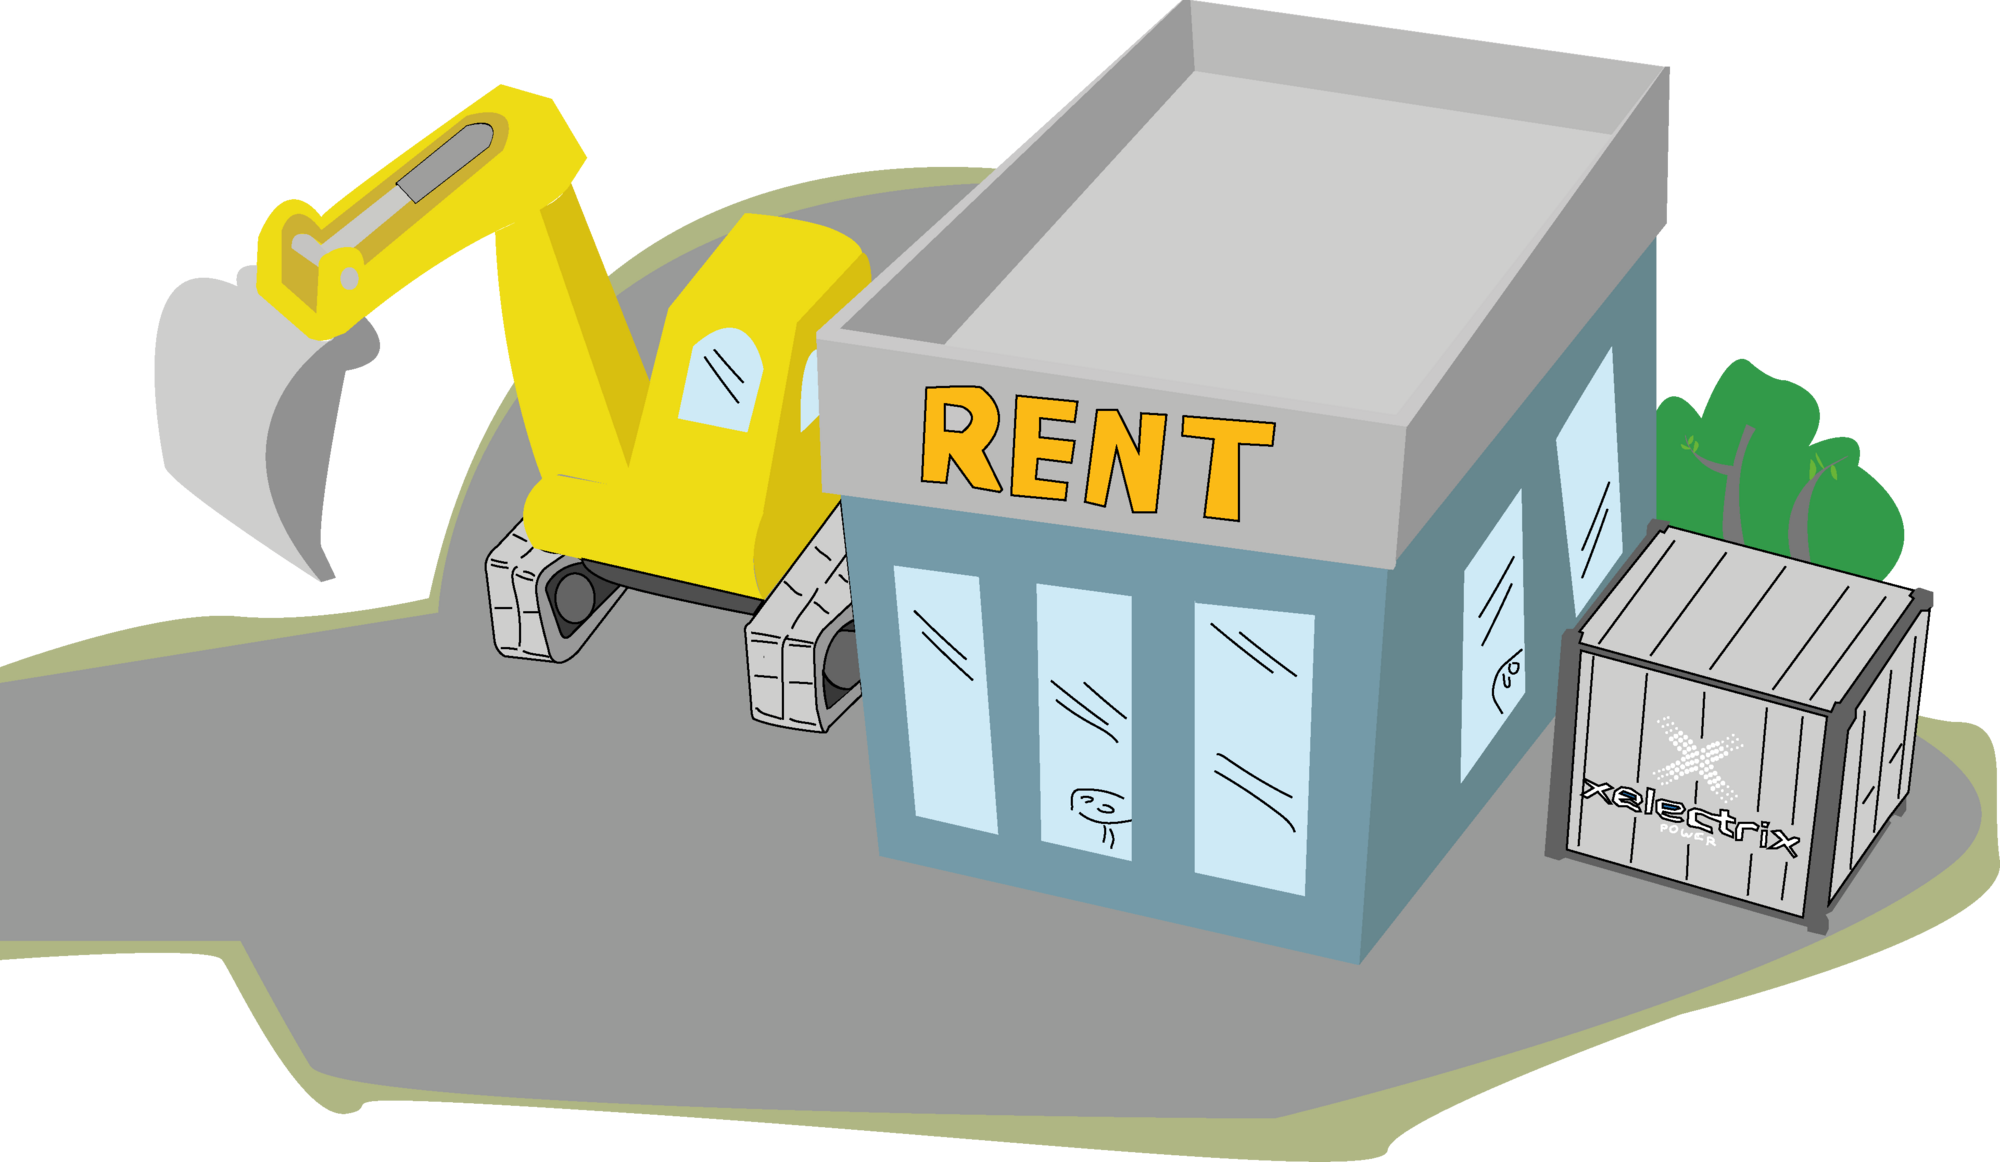 Rent energy storage, battery storage in construction machinery rental, energy storage in construction machinery rental